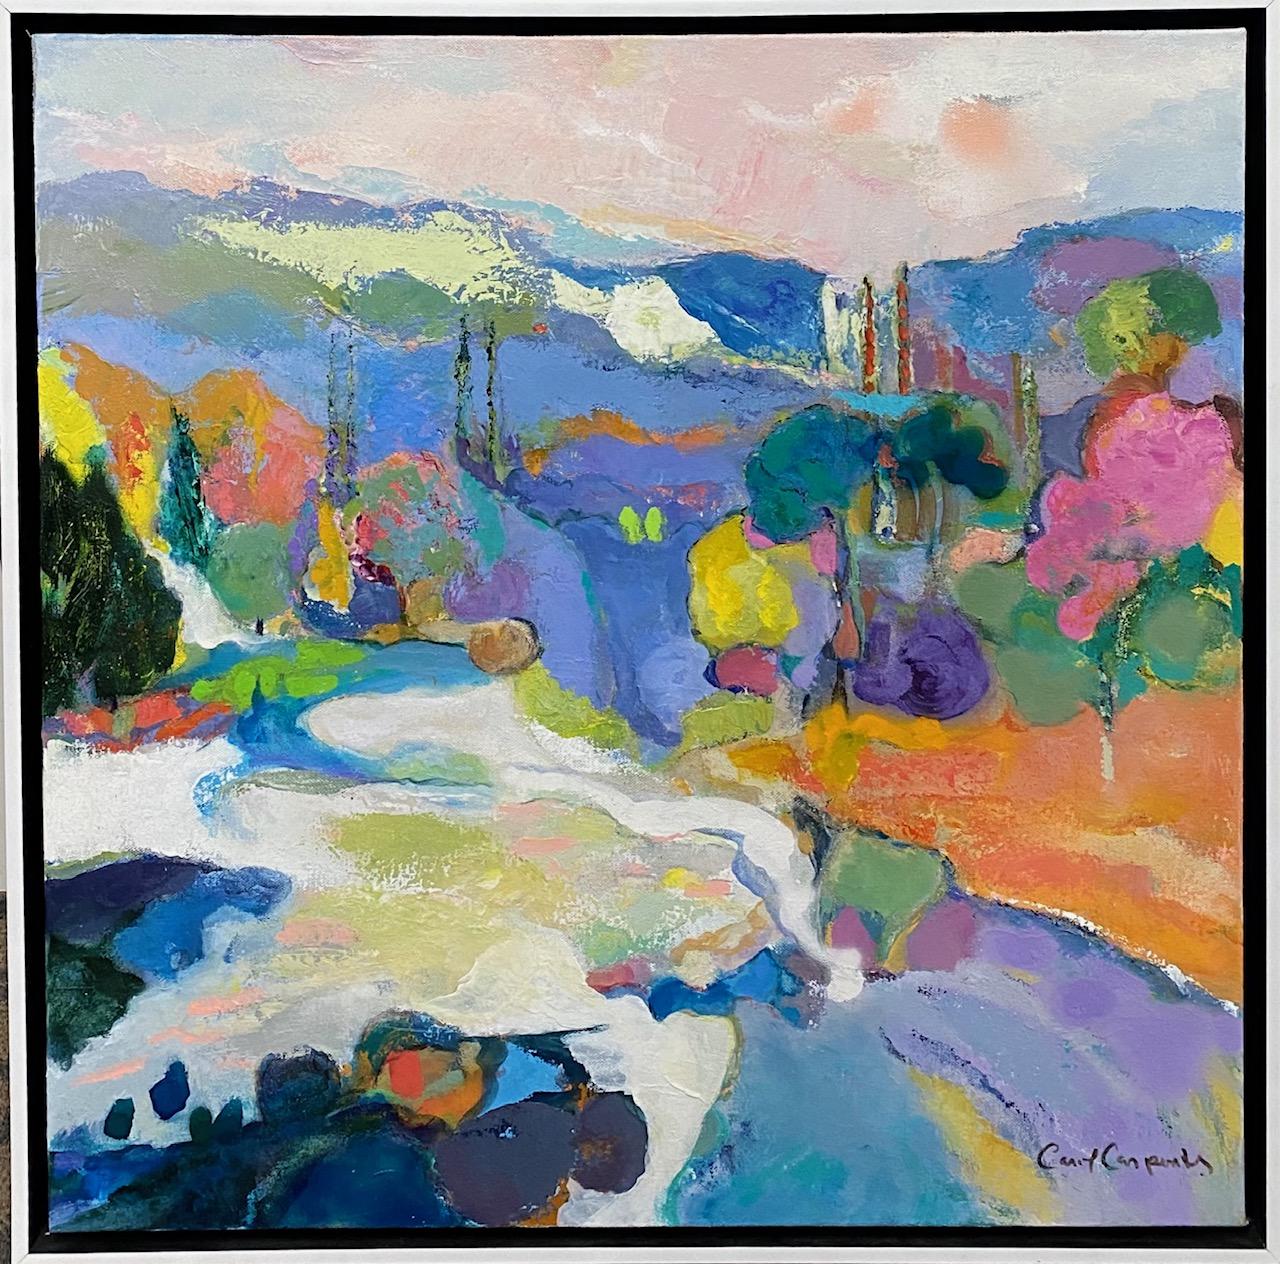 Carol Carpenter Landscape Painting - Lake Como, original 24x24 abstract expressionist Italian landscape